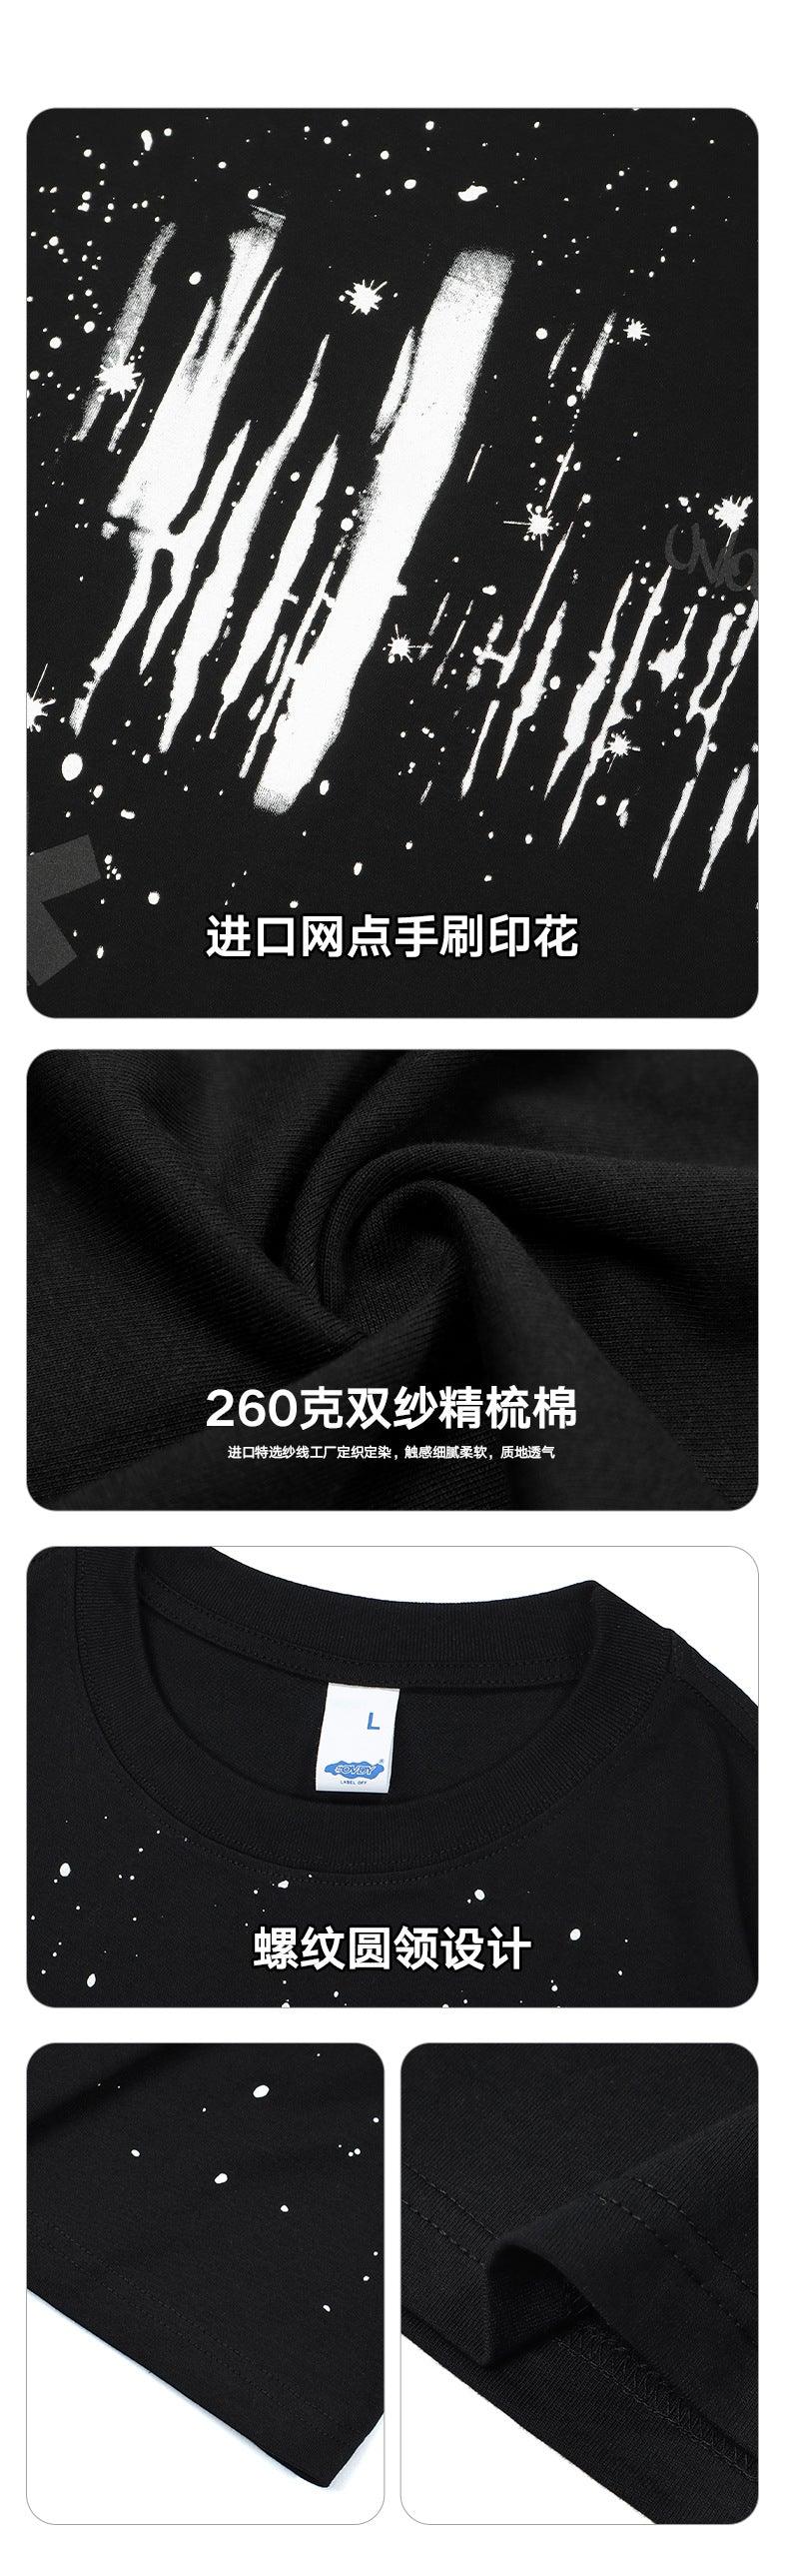 Black Splash Short Sleeve T-shirt J259 - UncleDon JM